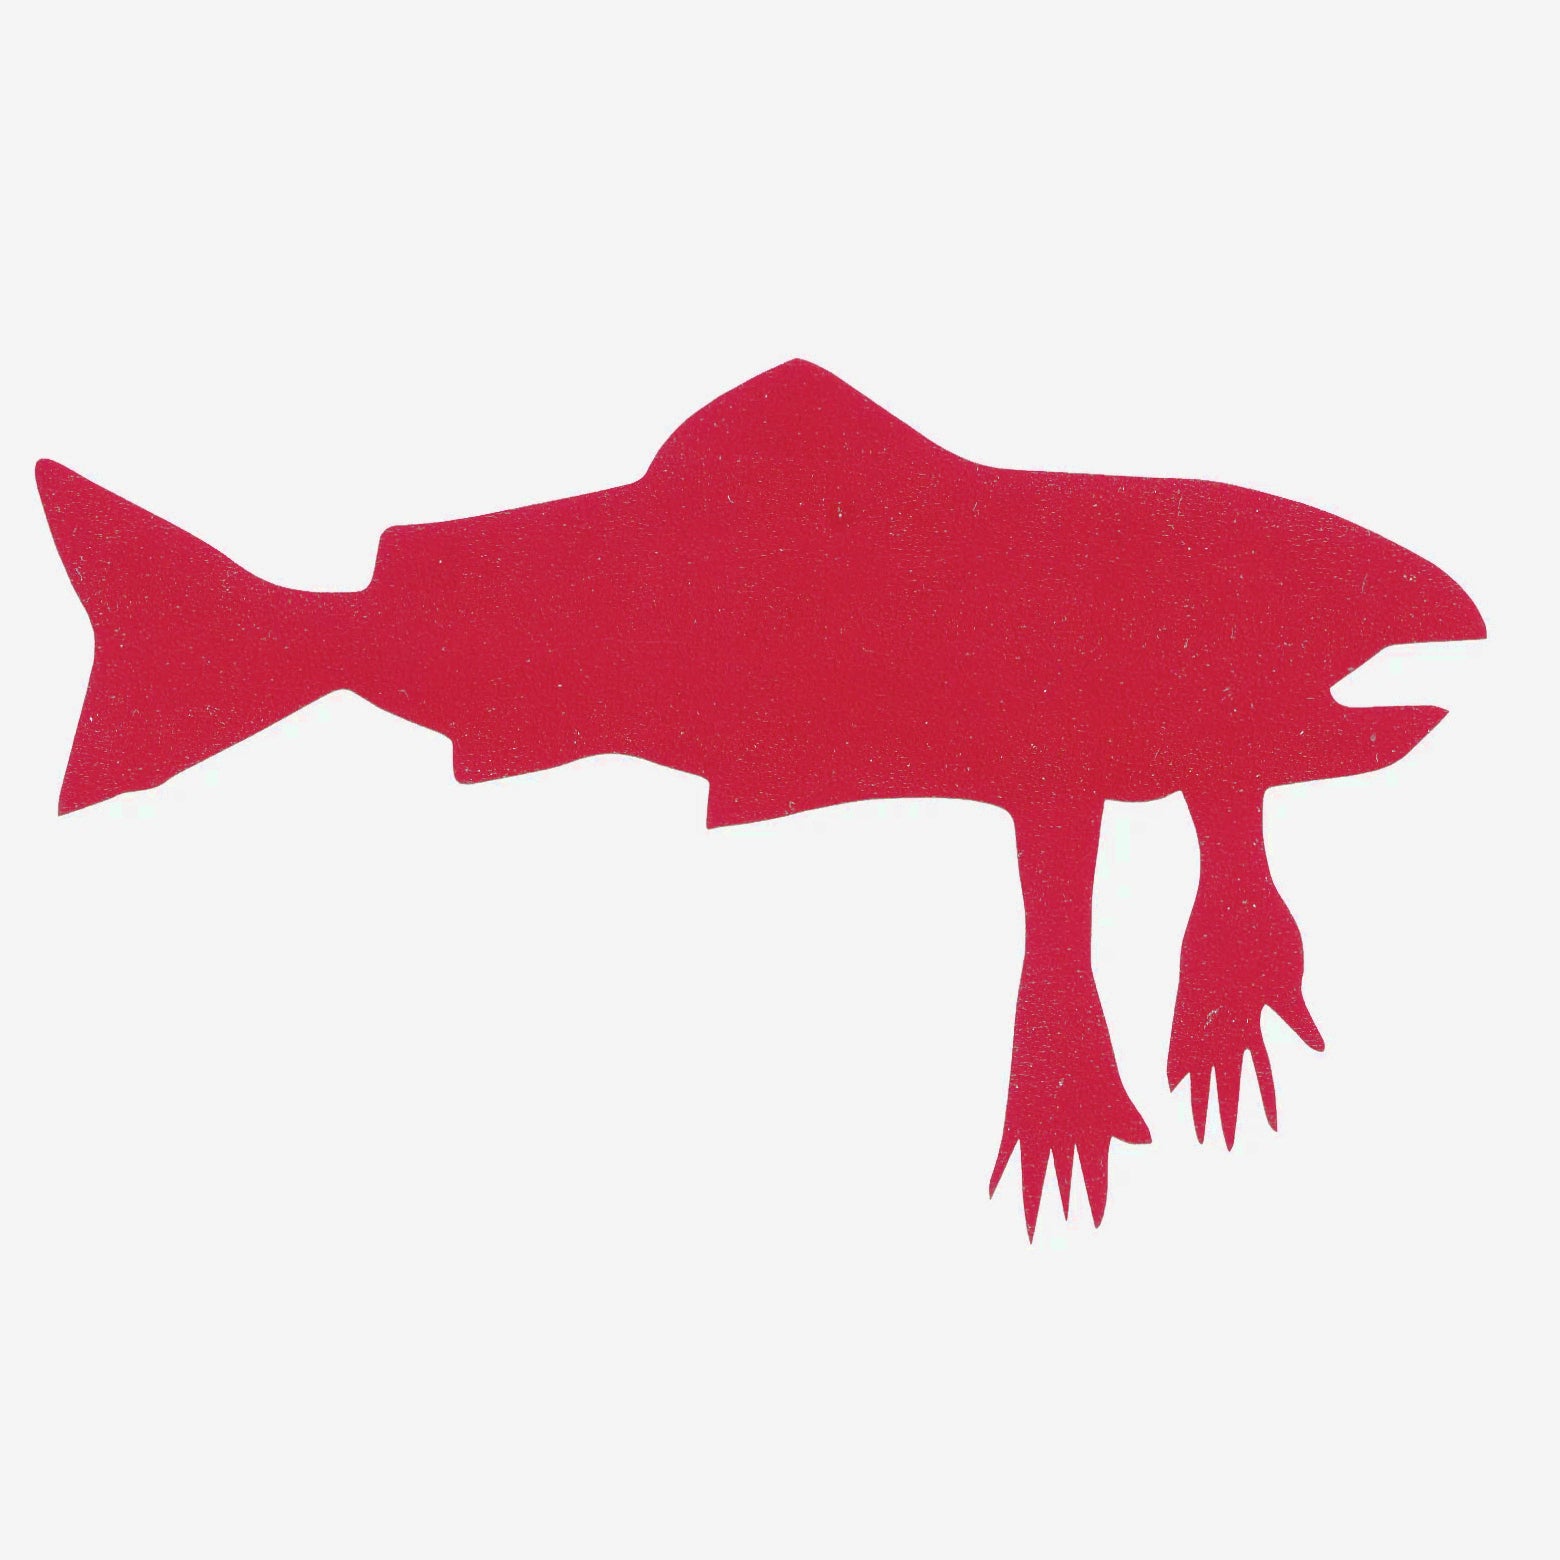 Red Die-Cut Salmon Arms Sticker